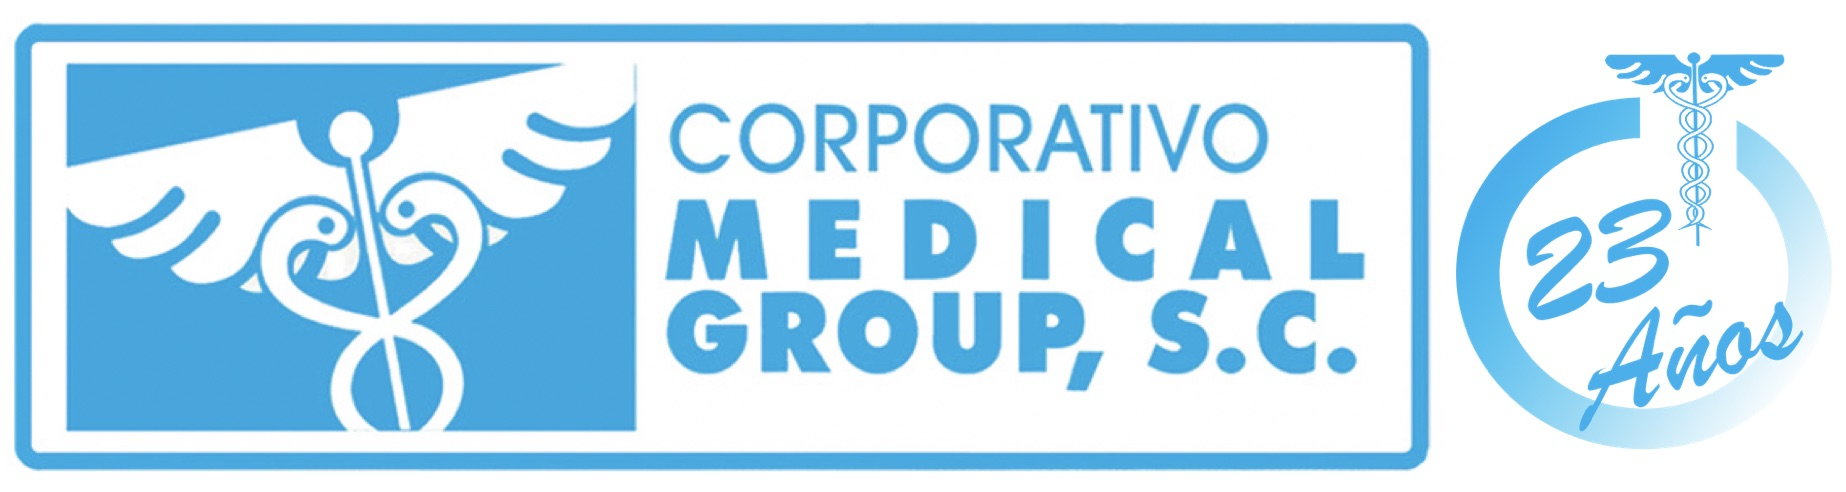 Corporativo Medical Group